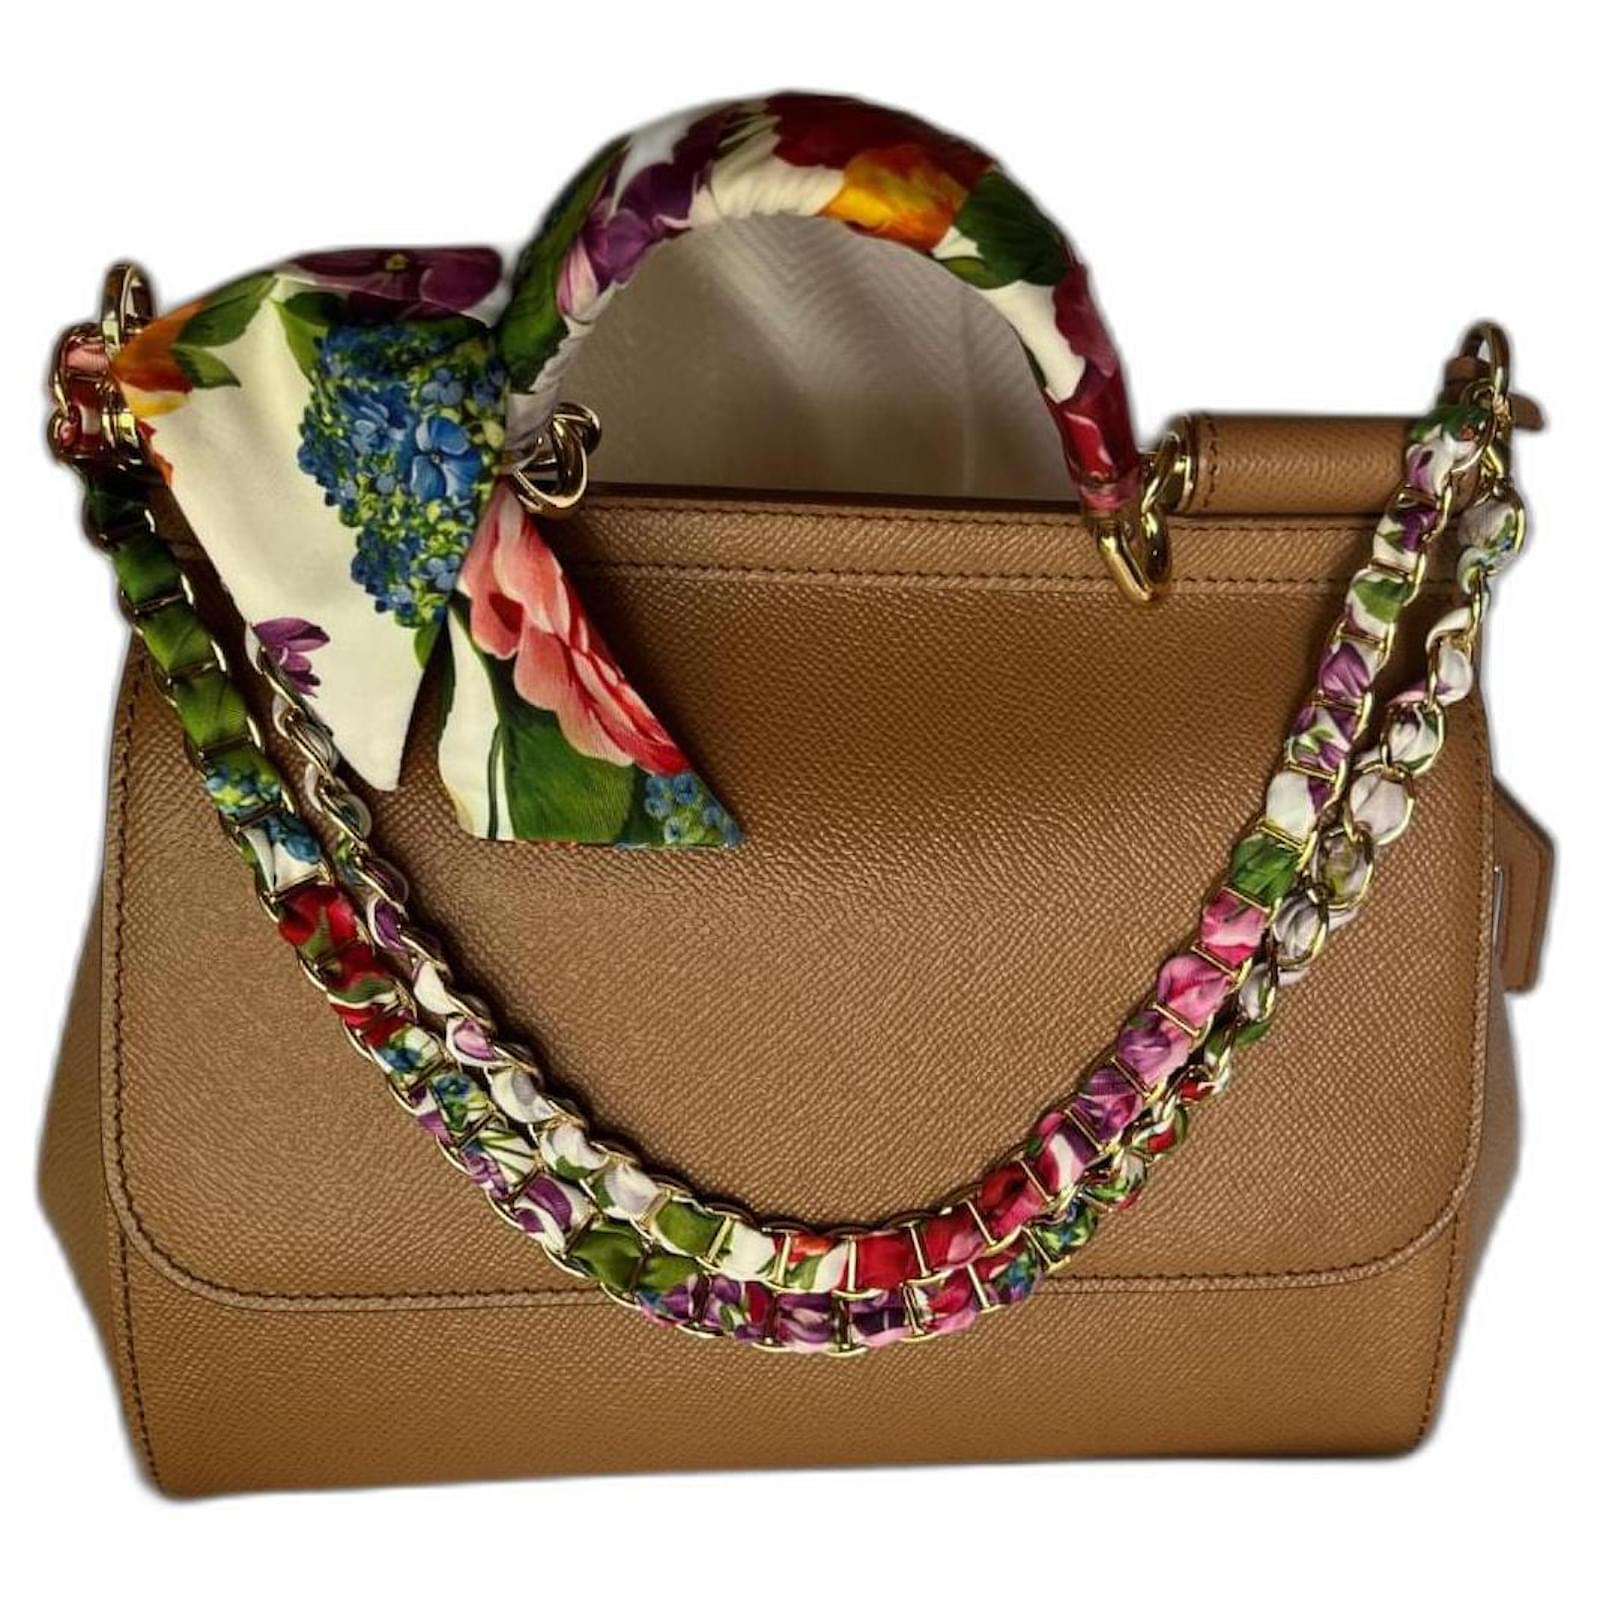 Dolce & Gabbana Sicily Medium Majolica Print Handbag in Multicolor